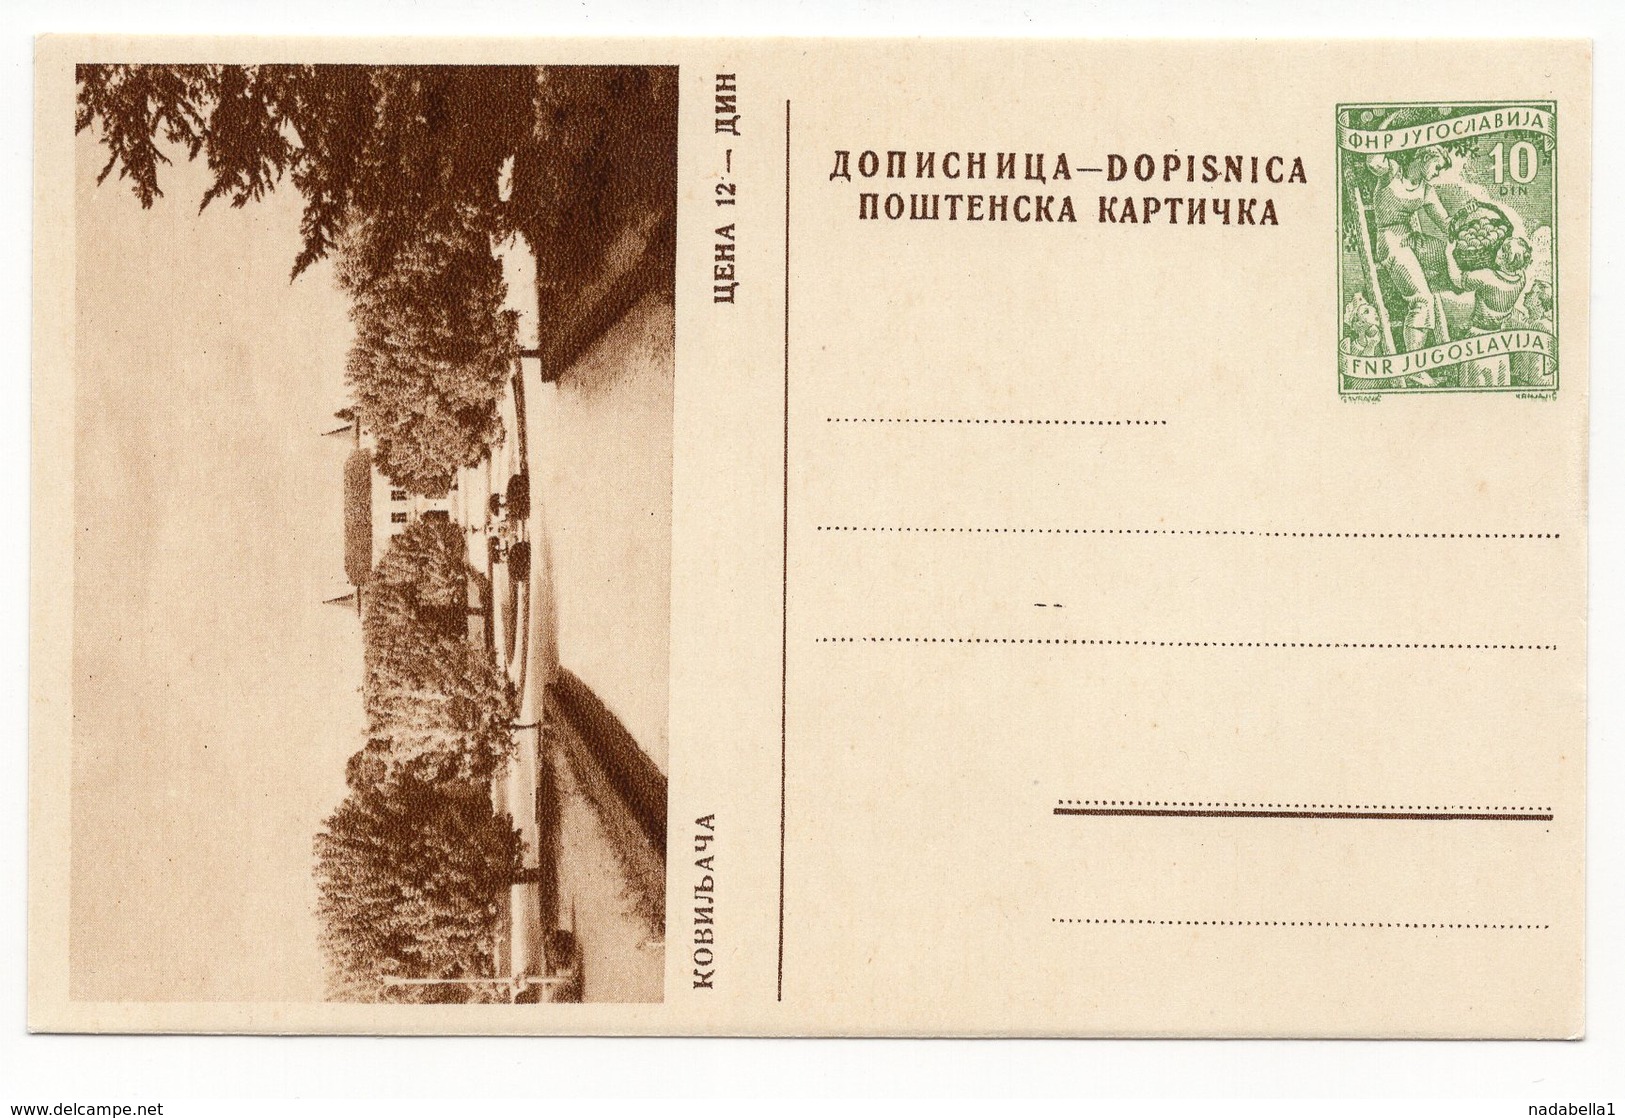 1956,YUGOSLAVIA, BANJA KOVILJACA, SPA, SERBIA, 10 DINARA GREEN, ILLUSTRATED STATIONERY CARD, MINT - Enteros Postales